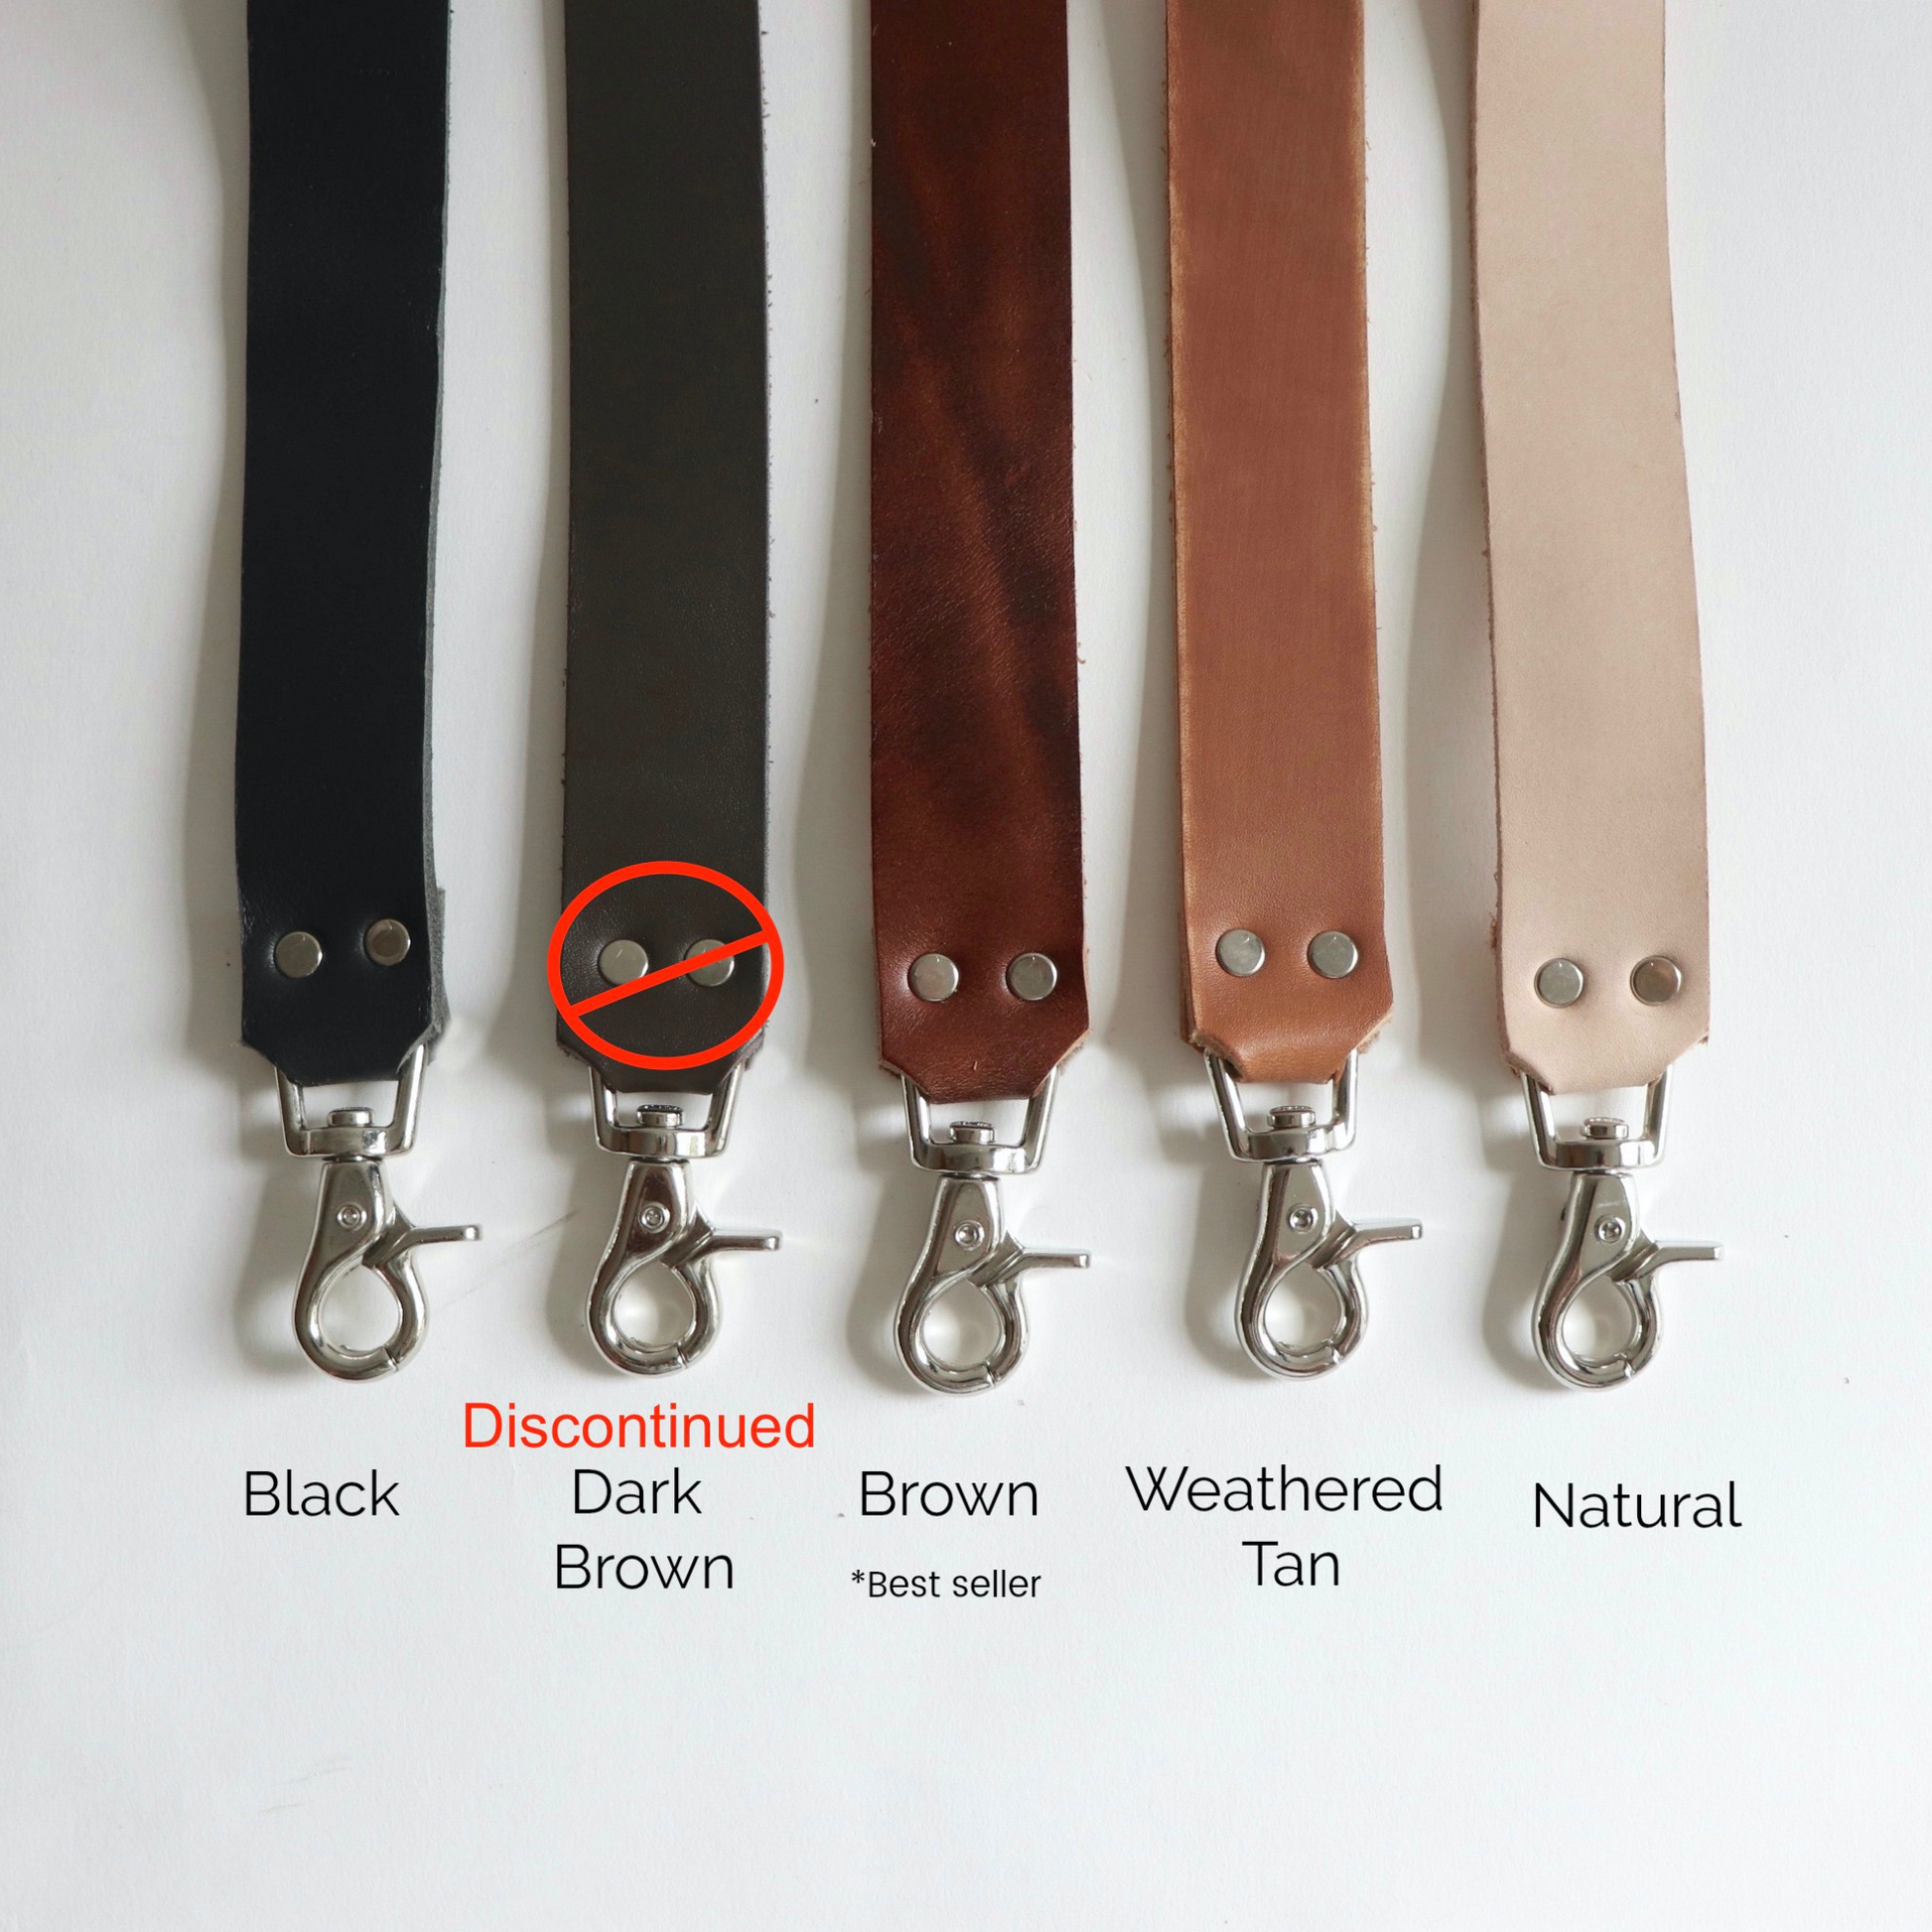 Replacement Shoulder Straps Leather Wristlet Wrist Bag Strap for